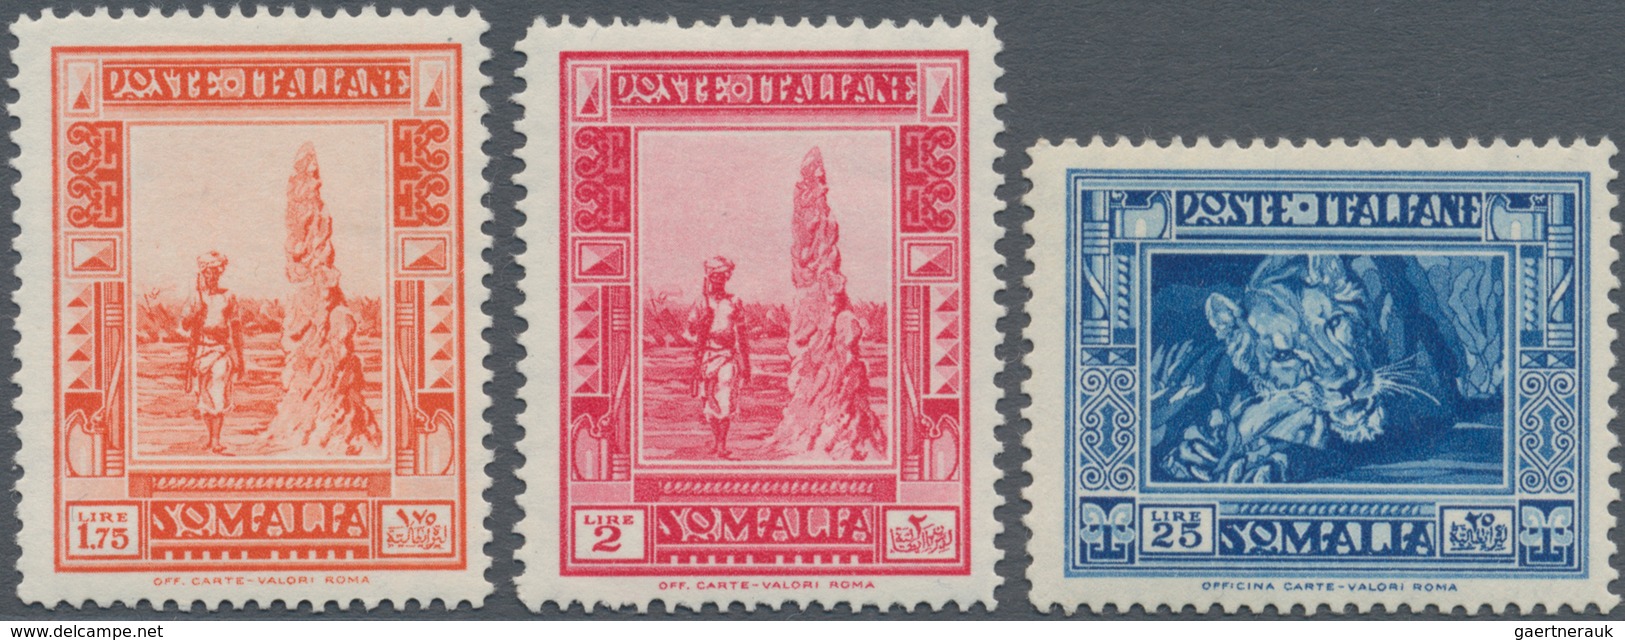 Italienisch-Somaliland: 1935/1938, Defintives "Pictorials", 1.75l. Orange, 2l. Carmine And 25l. Blue - Somalia